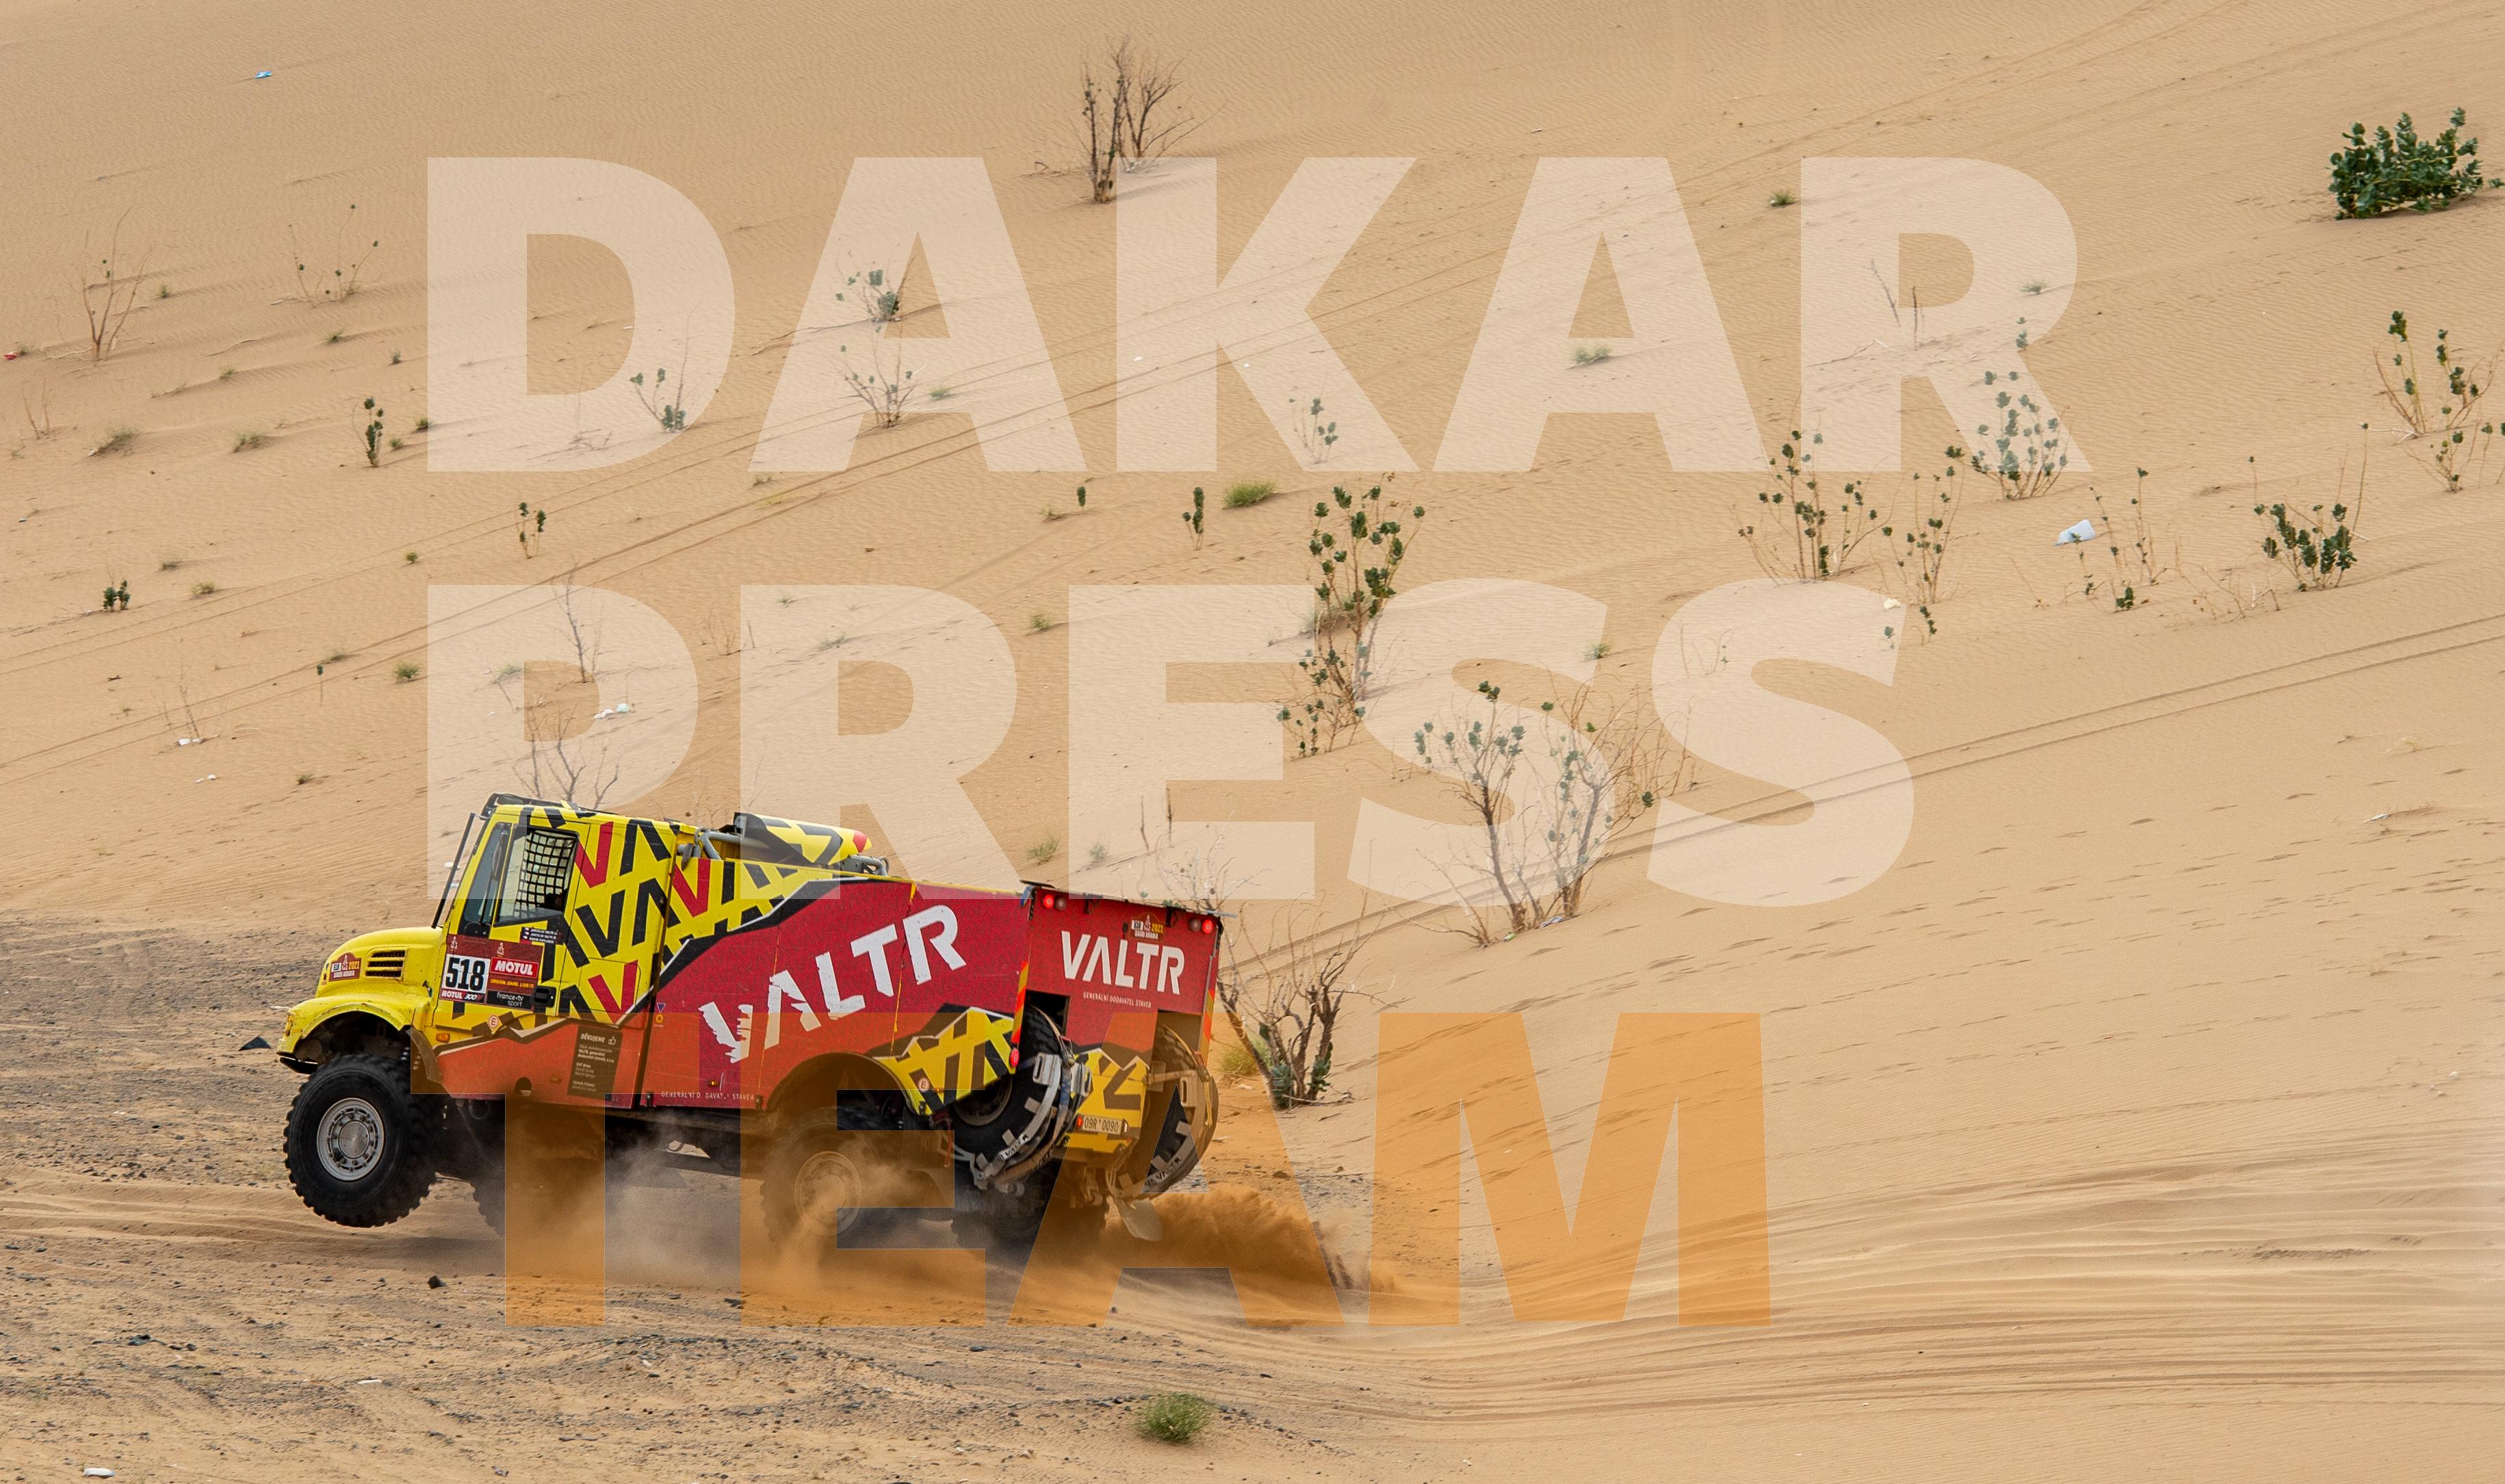 founder Dakar Press Team